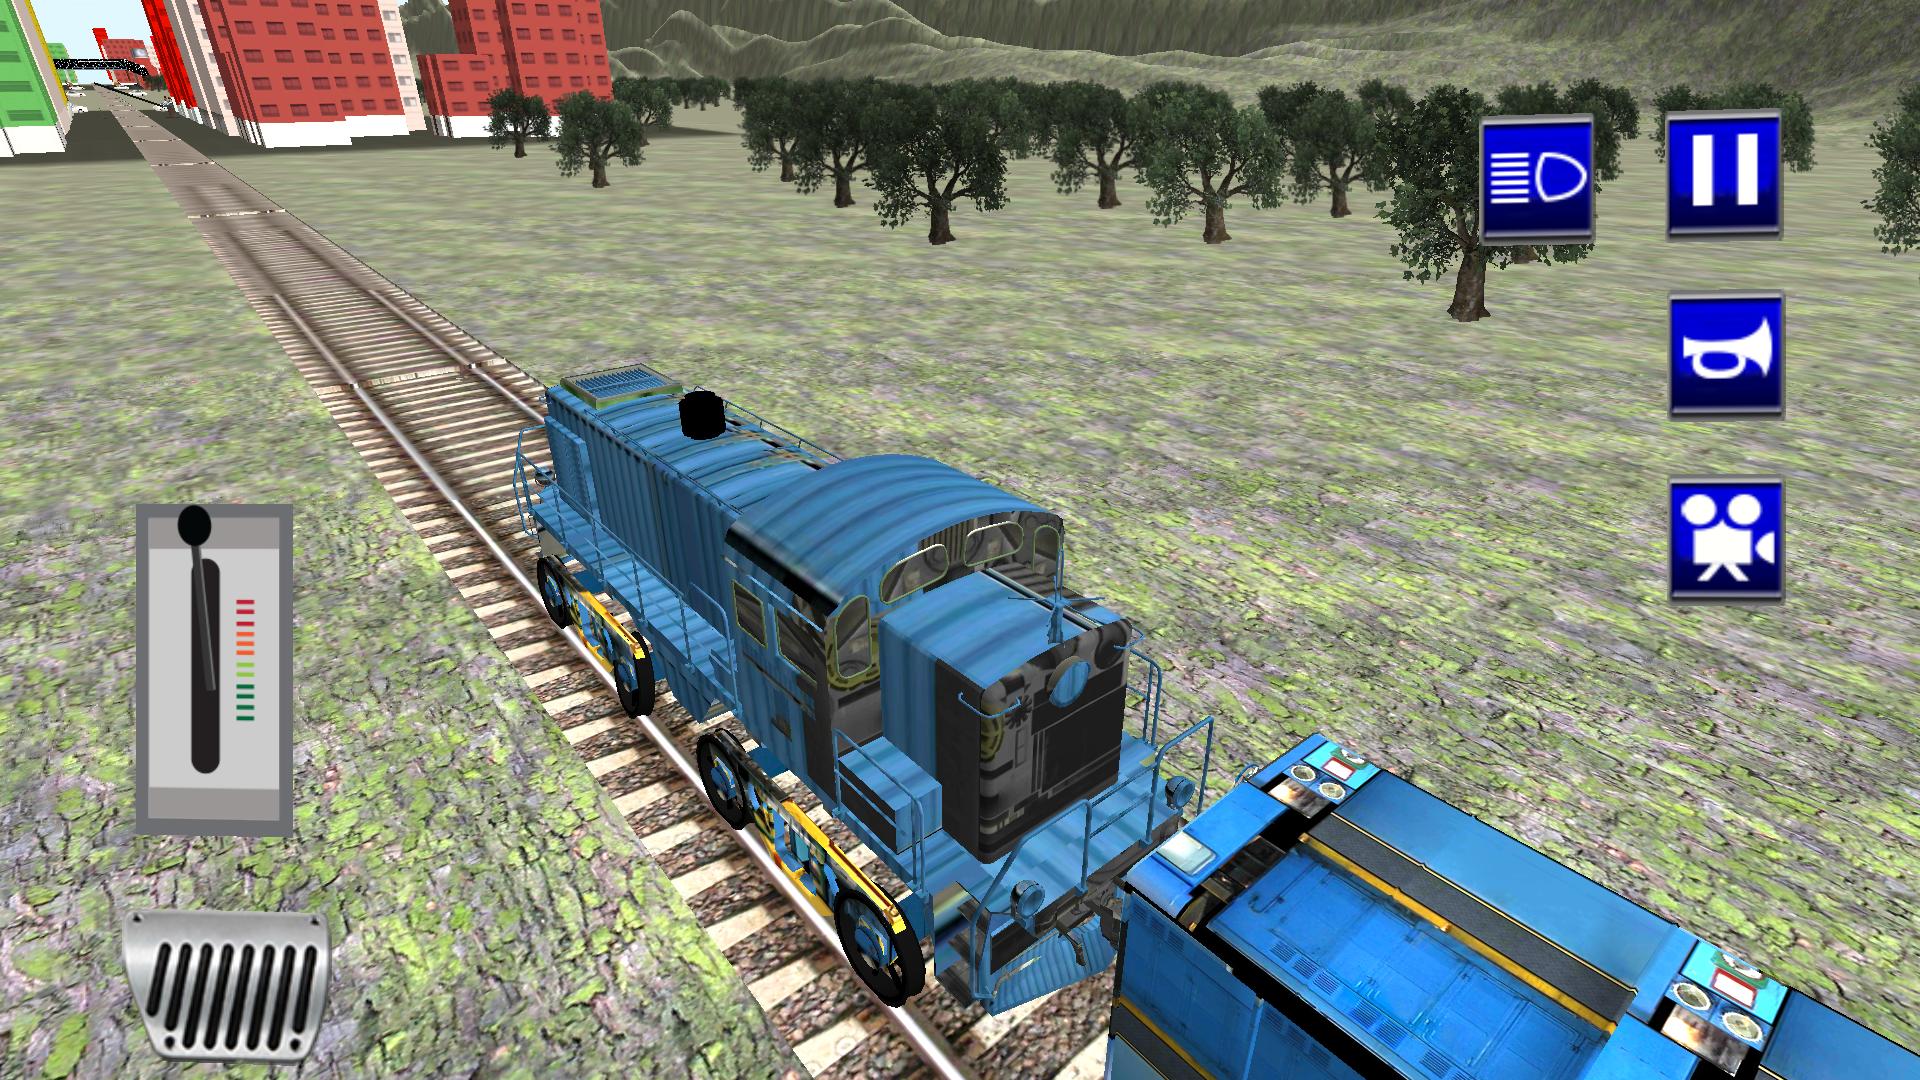 Игра про симулятор поезда. РЖД симулятор АПК. Train Simulator паровоз. Тгм3 Трайз симулятор. Симулятор управления паровозом.